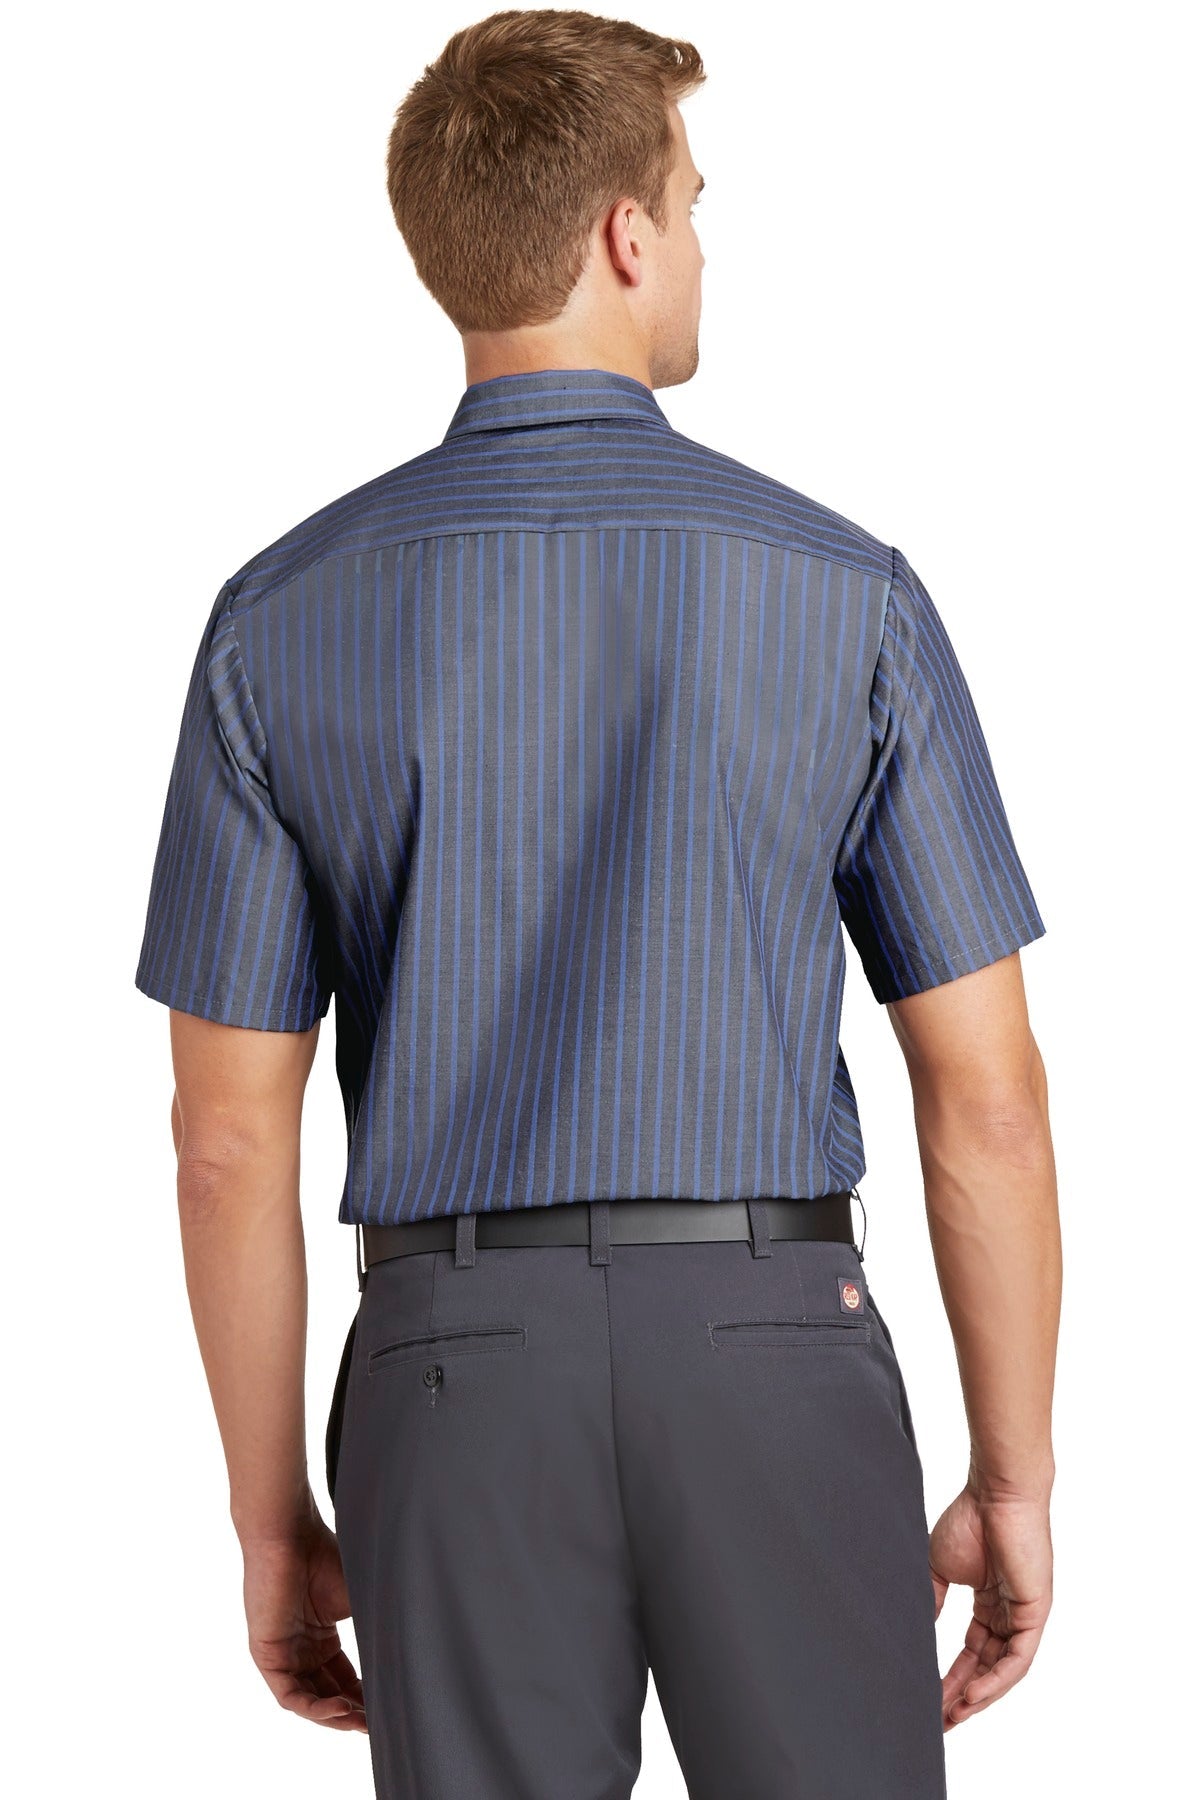 Red Kap® Short Sleeve Striped Industrial Work Shirt. CS20 - DFW Impression